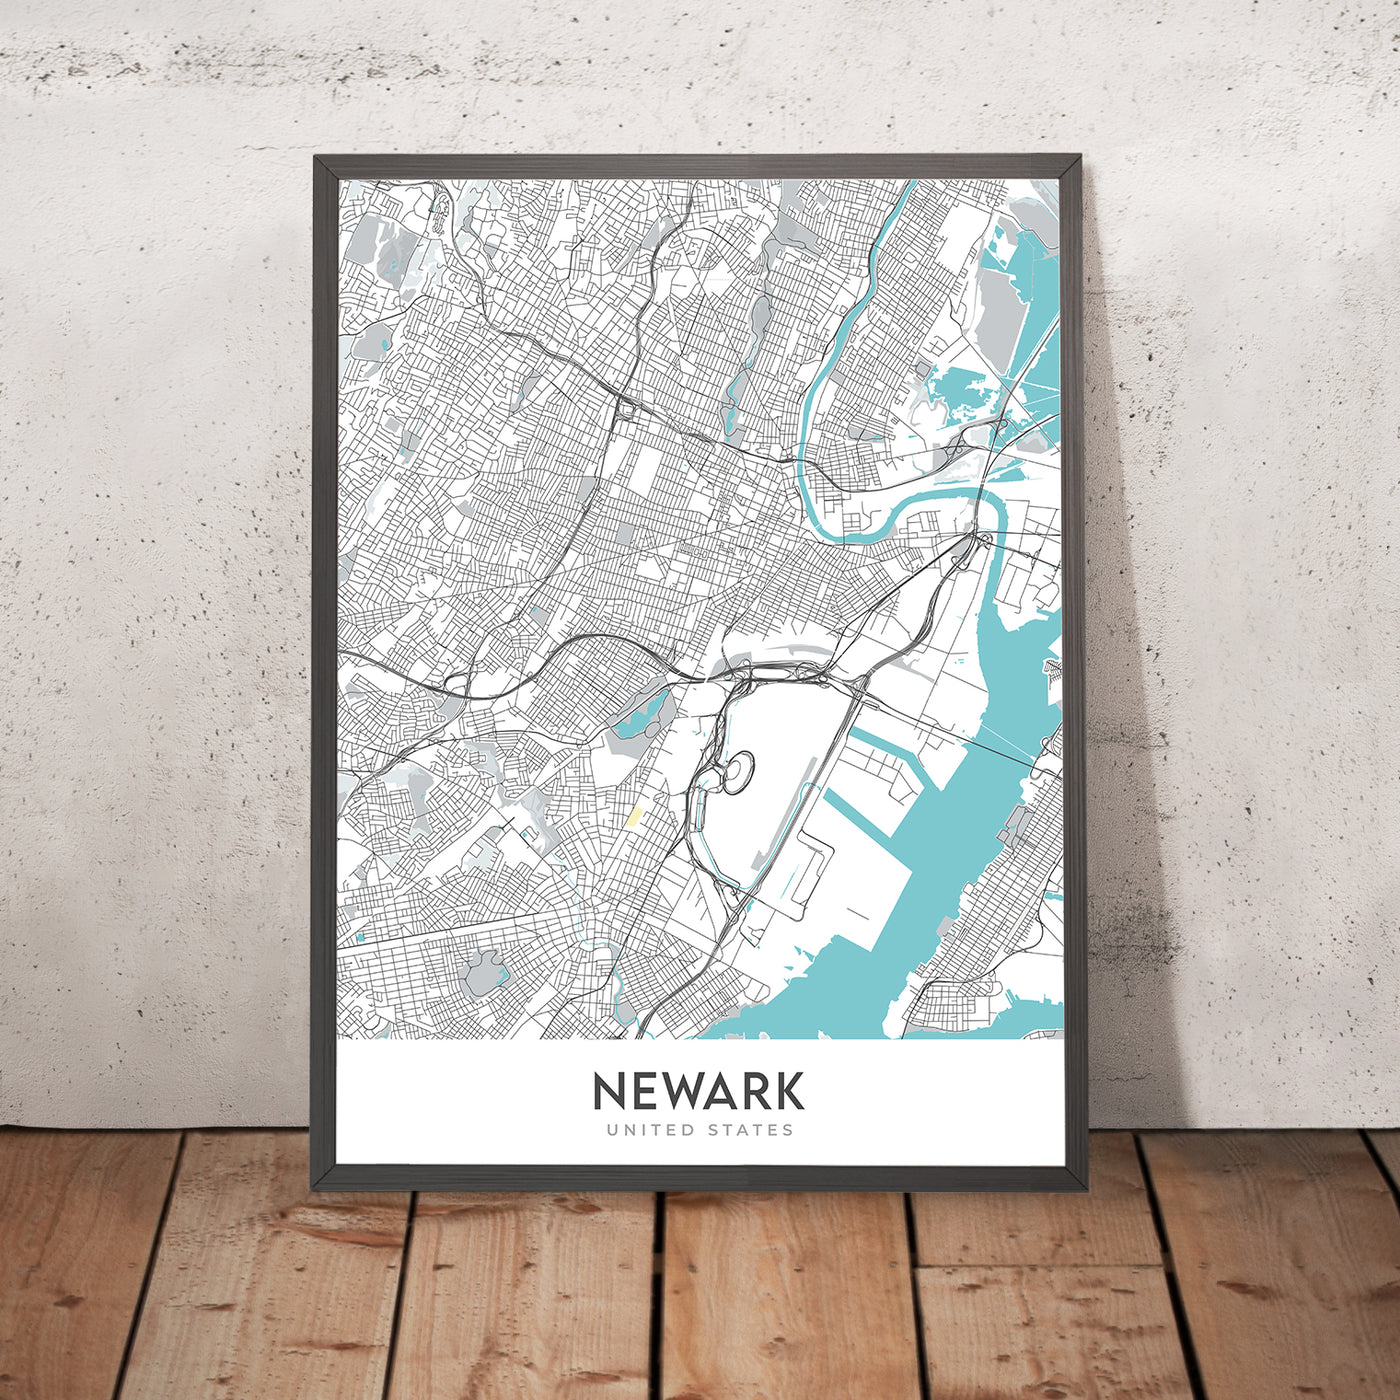 Modern City Map of Newark, NJ: Downtown, Airport (EWR), Ironbound, Prudential Center, Rutgers, NJ Turnpike